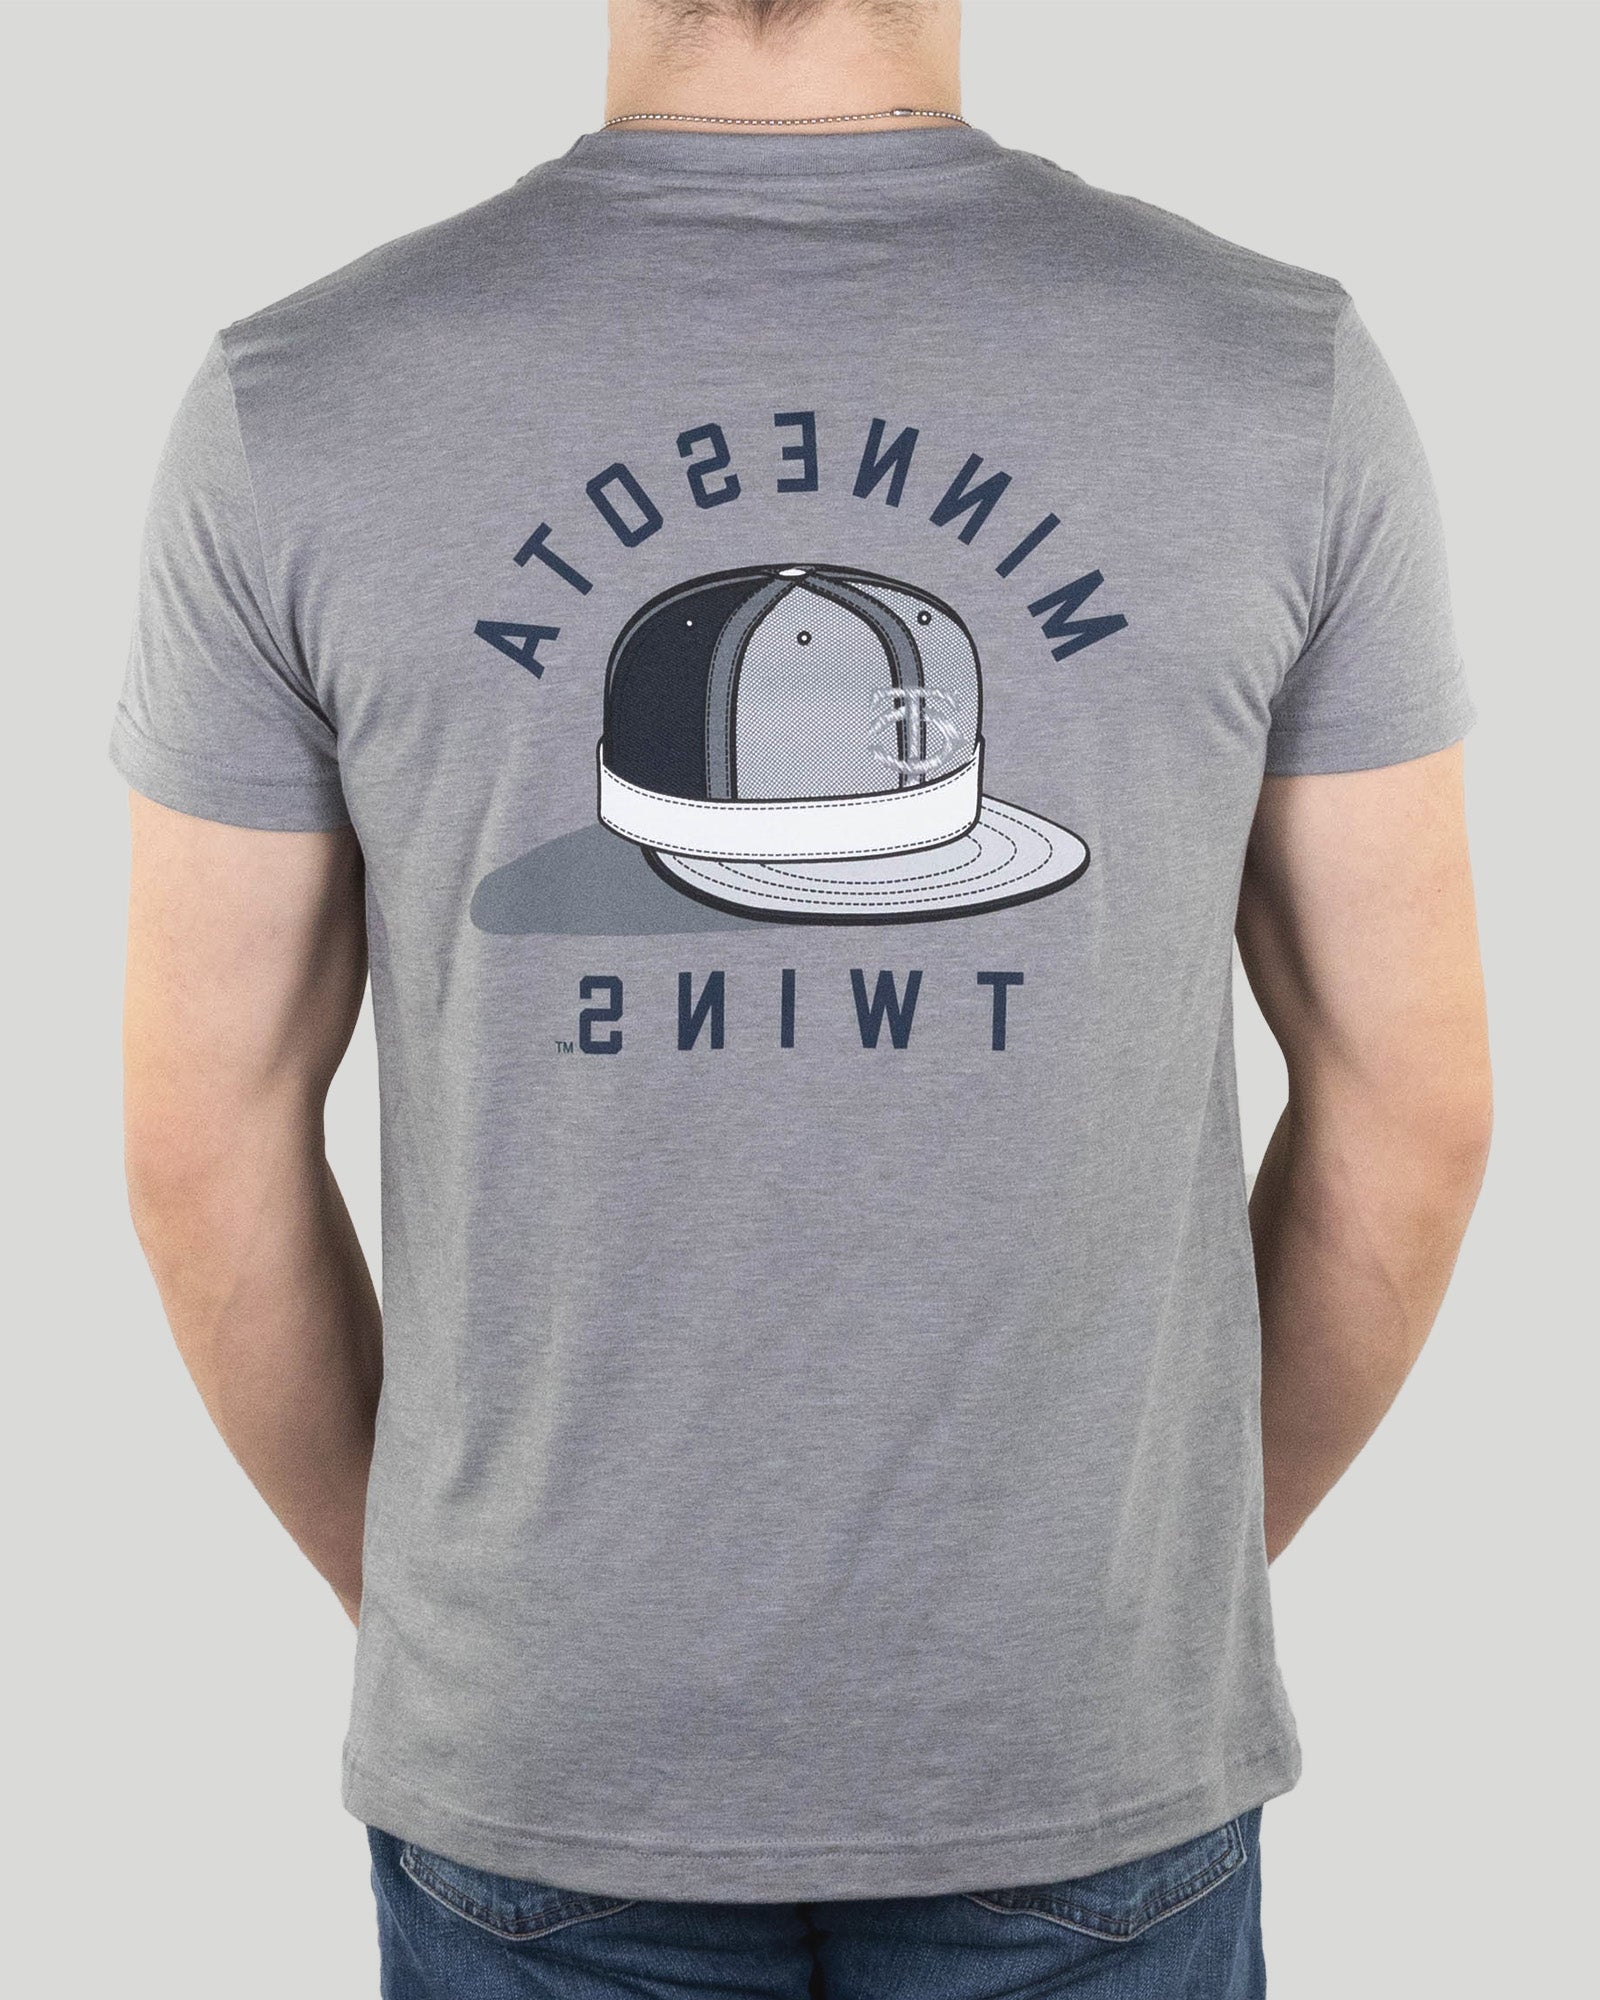 Best Minnesota Twins playoff gear: Postseason shirts, hats, hoodie